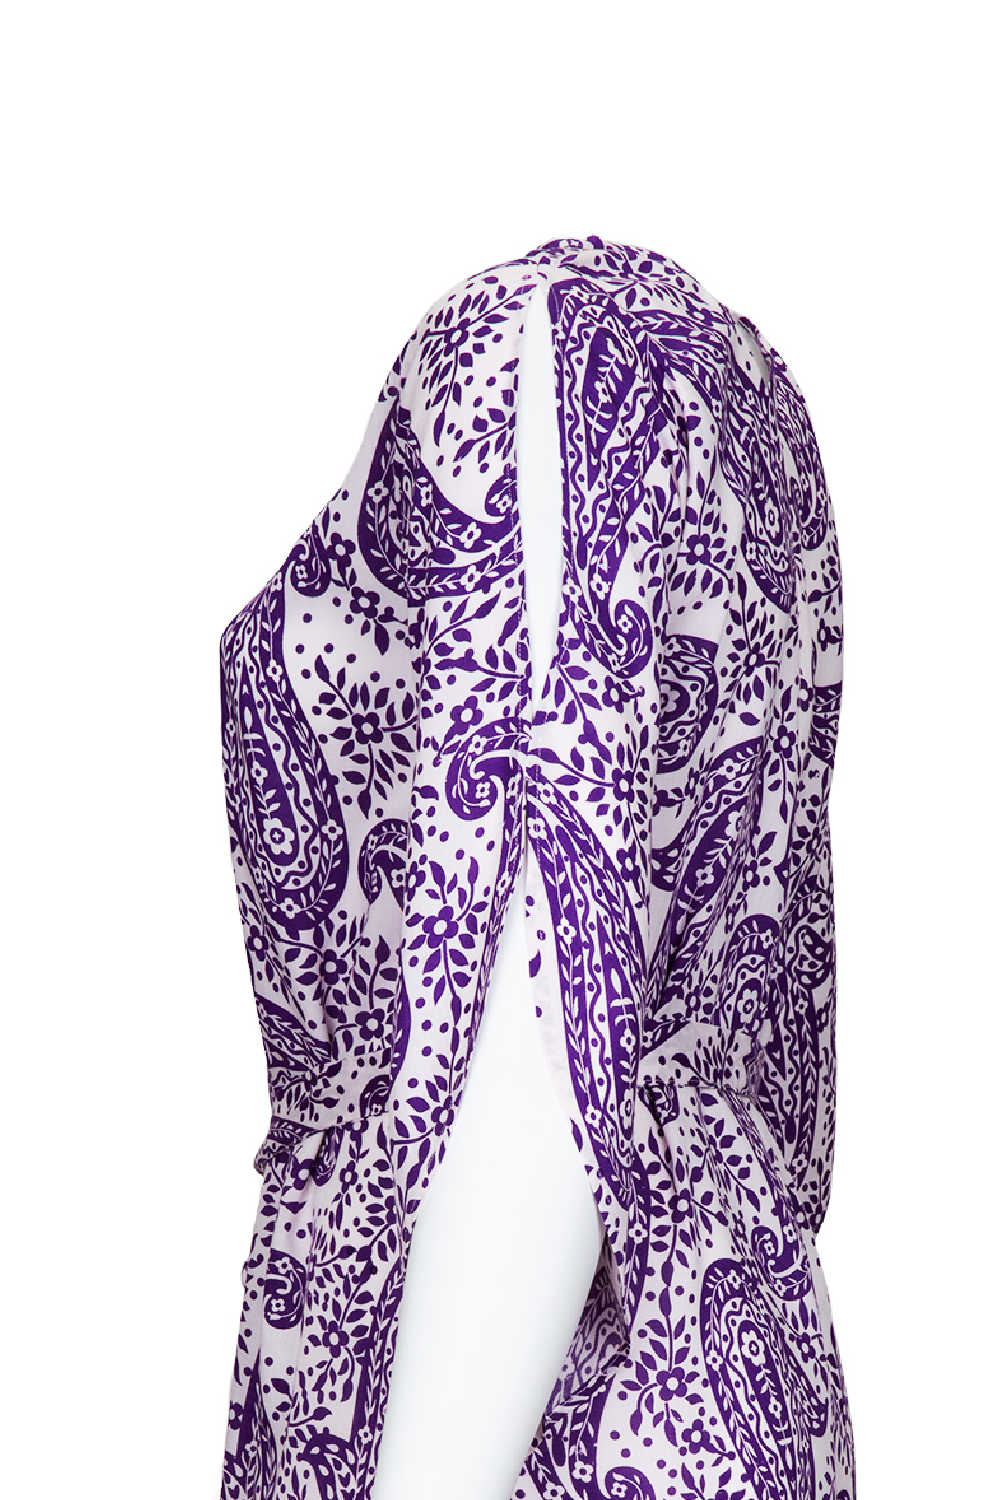 summer-dress-white-purple-paisley-print